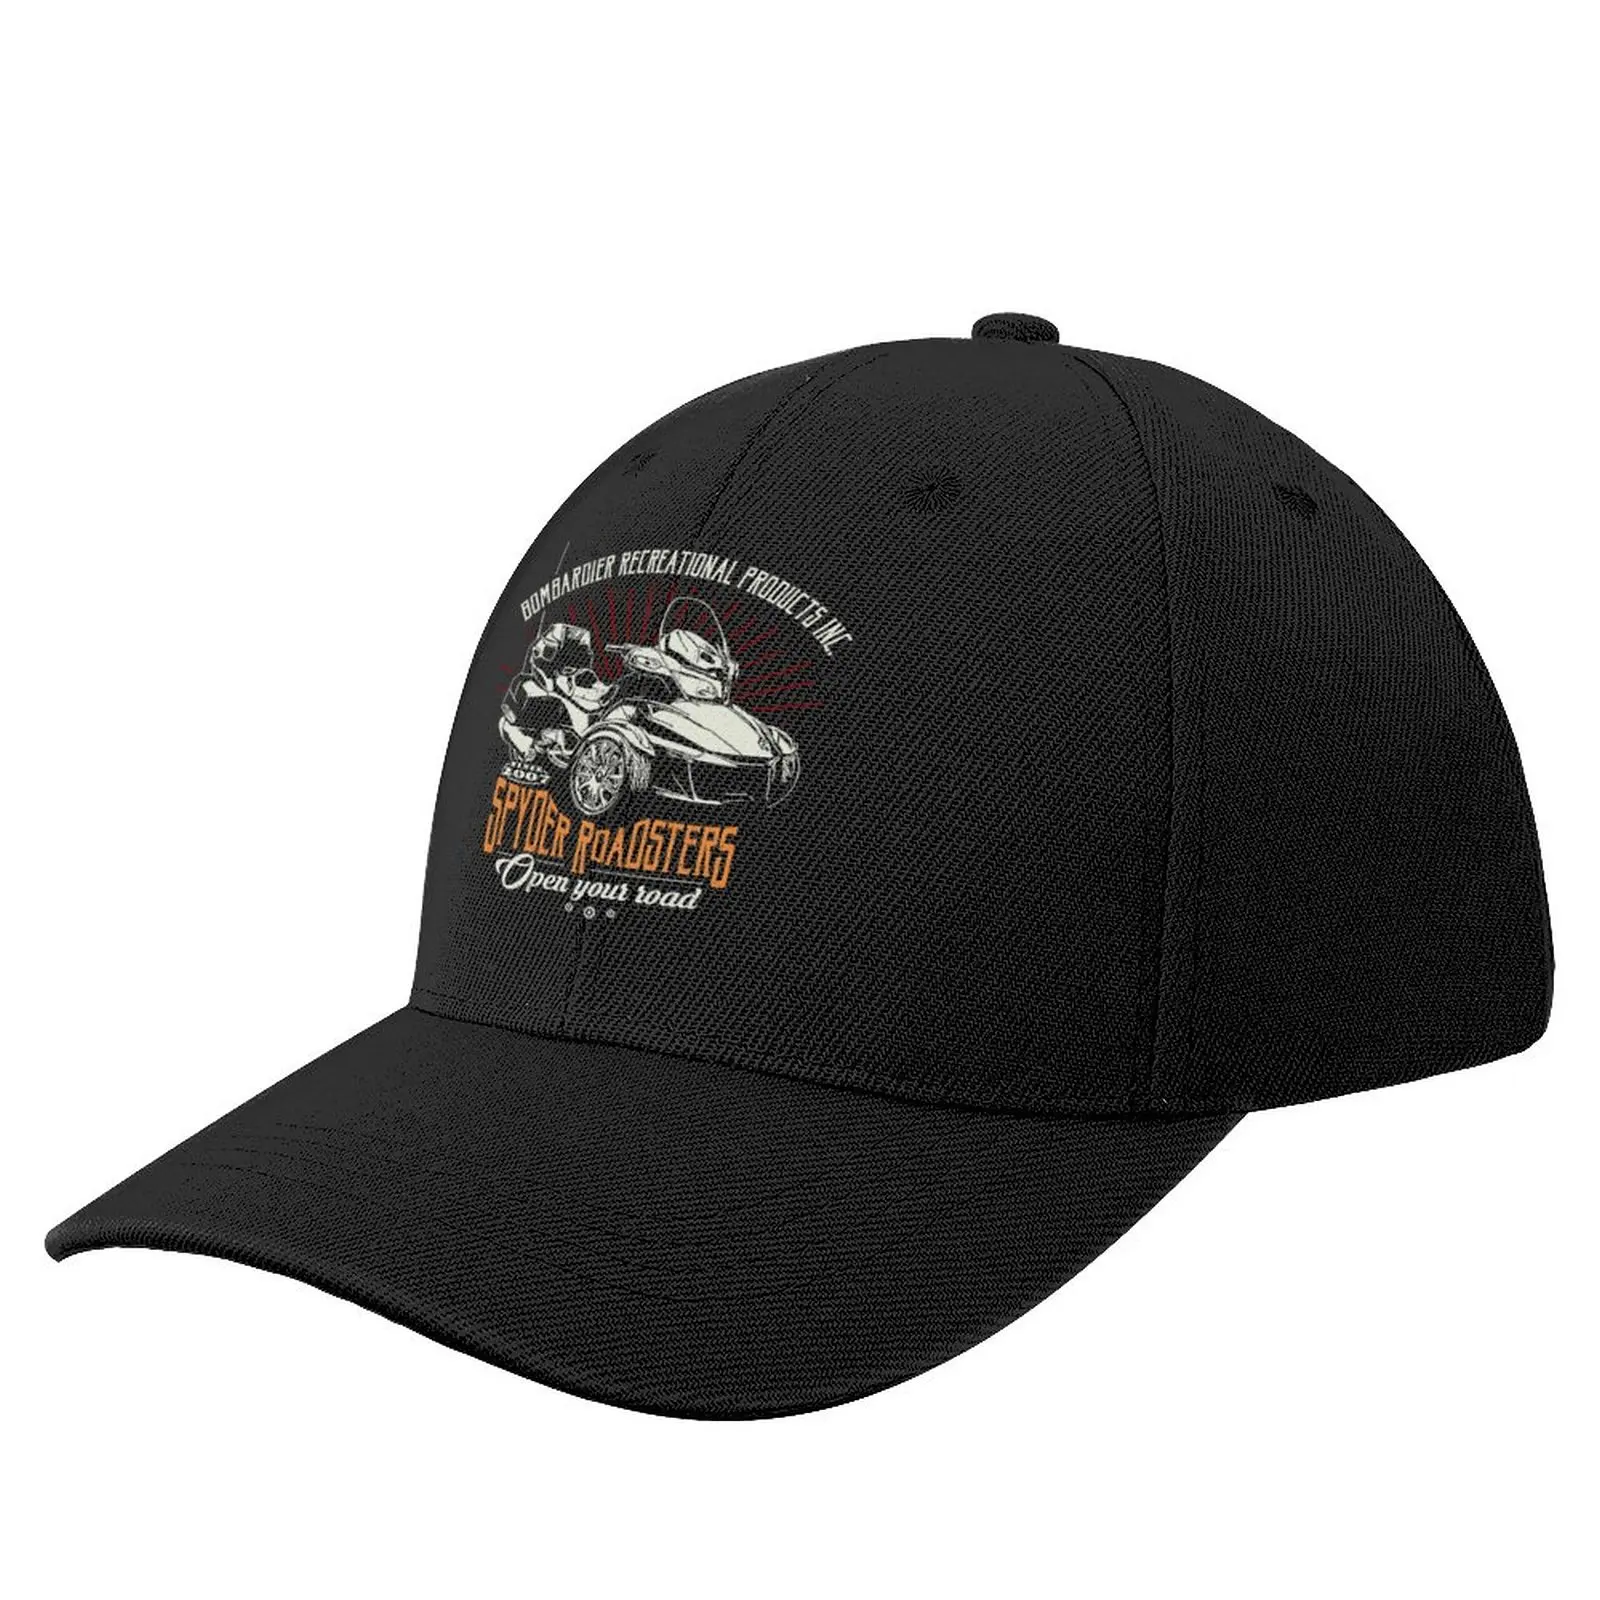 

Can am spyder brp roadsters classic t shirt Baseball Cap Dropshipping Big Size Hat Hats For Women Men'S